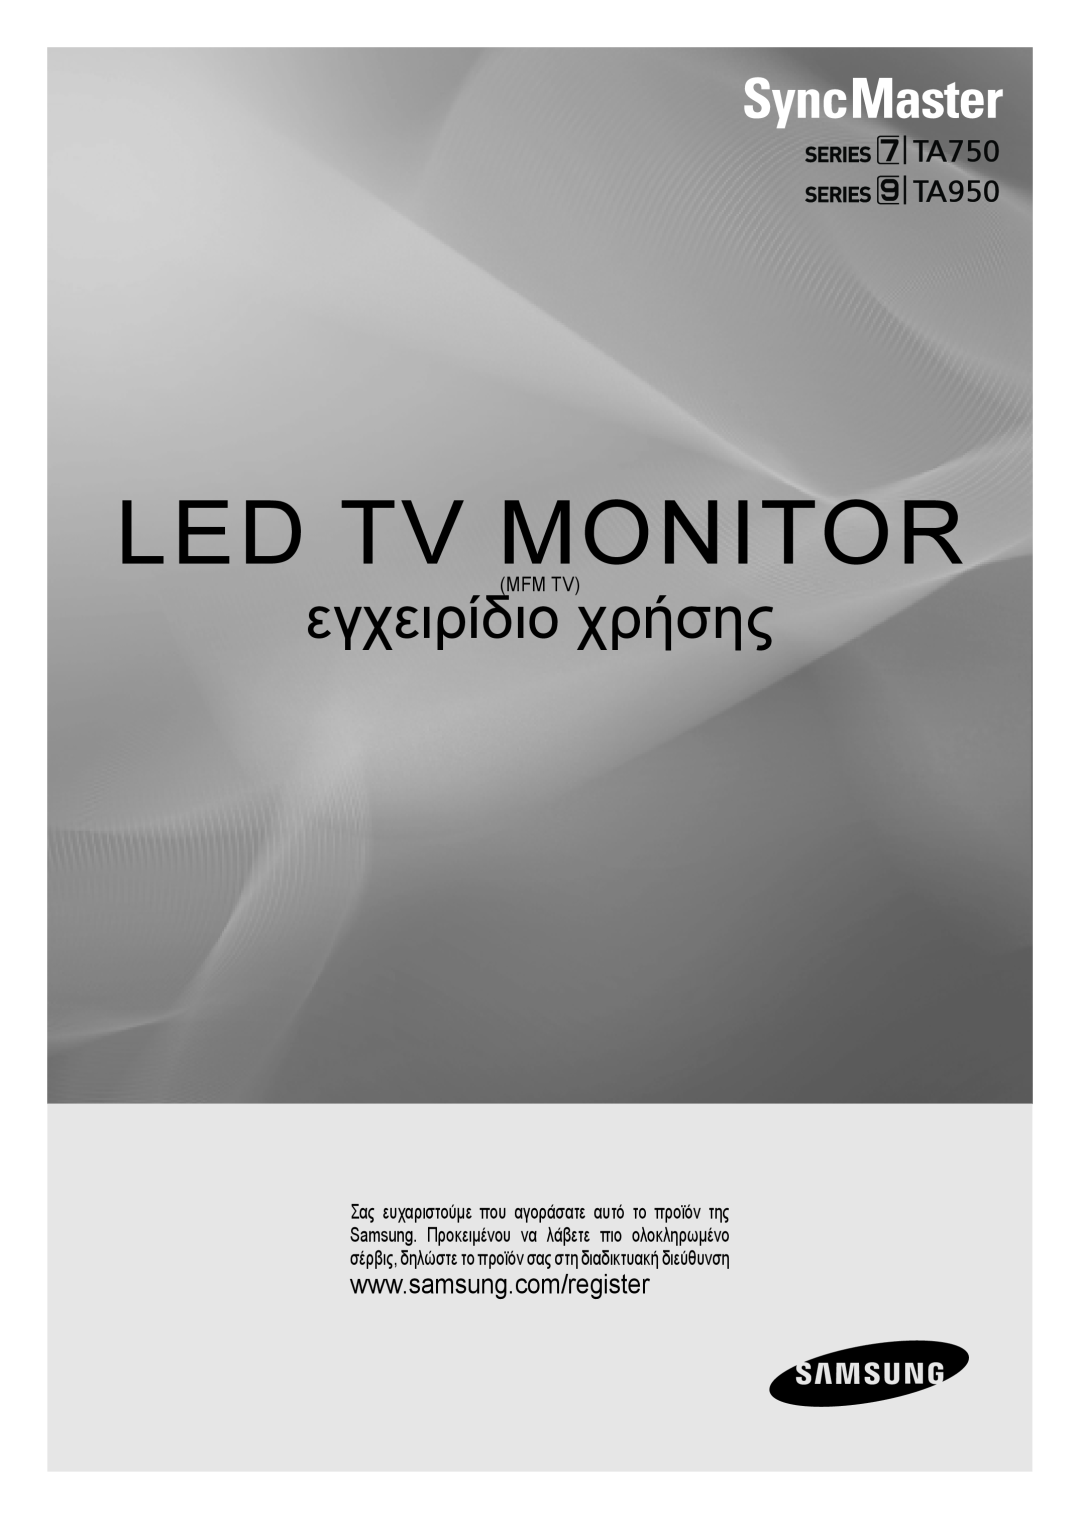 Samsung LT23A750EX/EN, LT27A750EX/EN, LT27A950EX/EN manual Mfm Tv, Led Tv Monitor, εγχειρίδιο χρήσης, TA750 TA950 